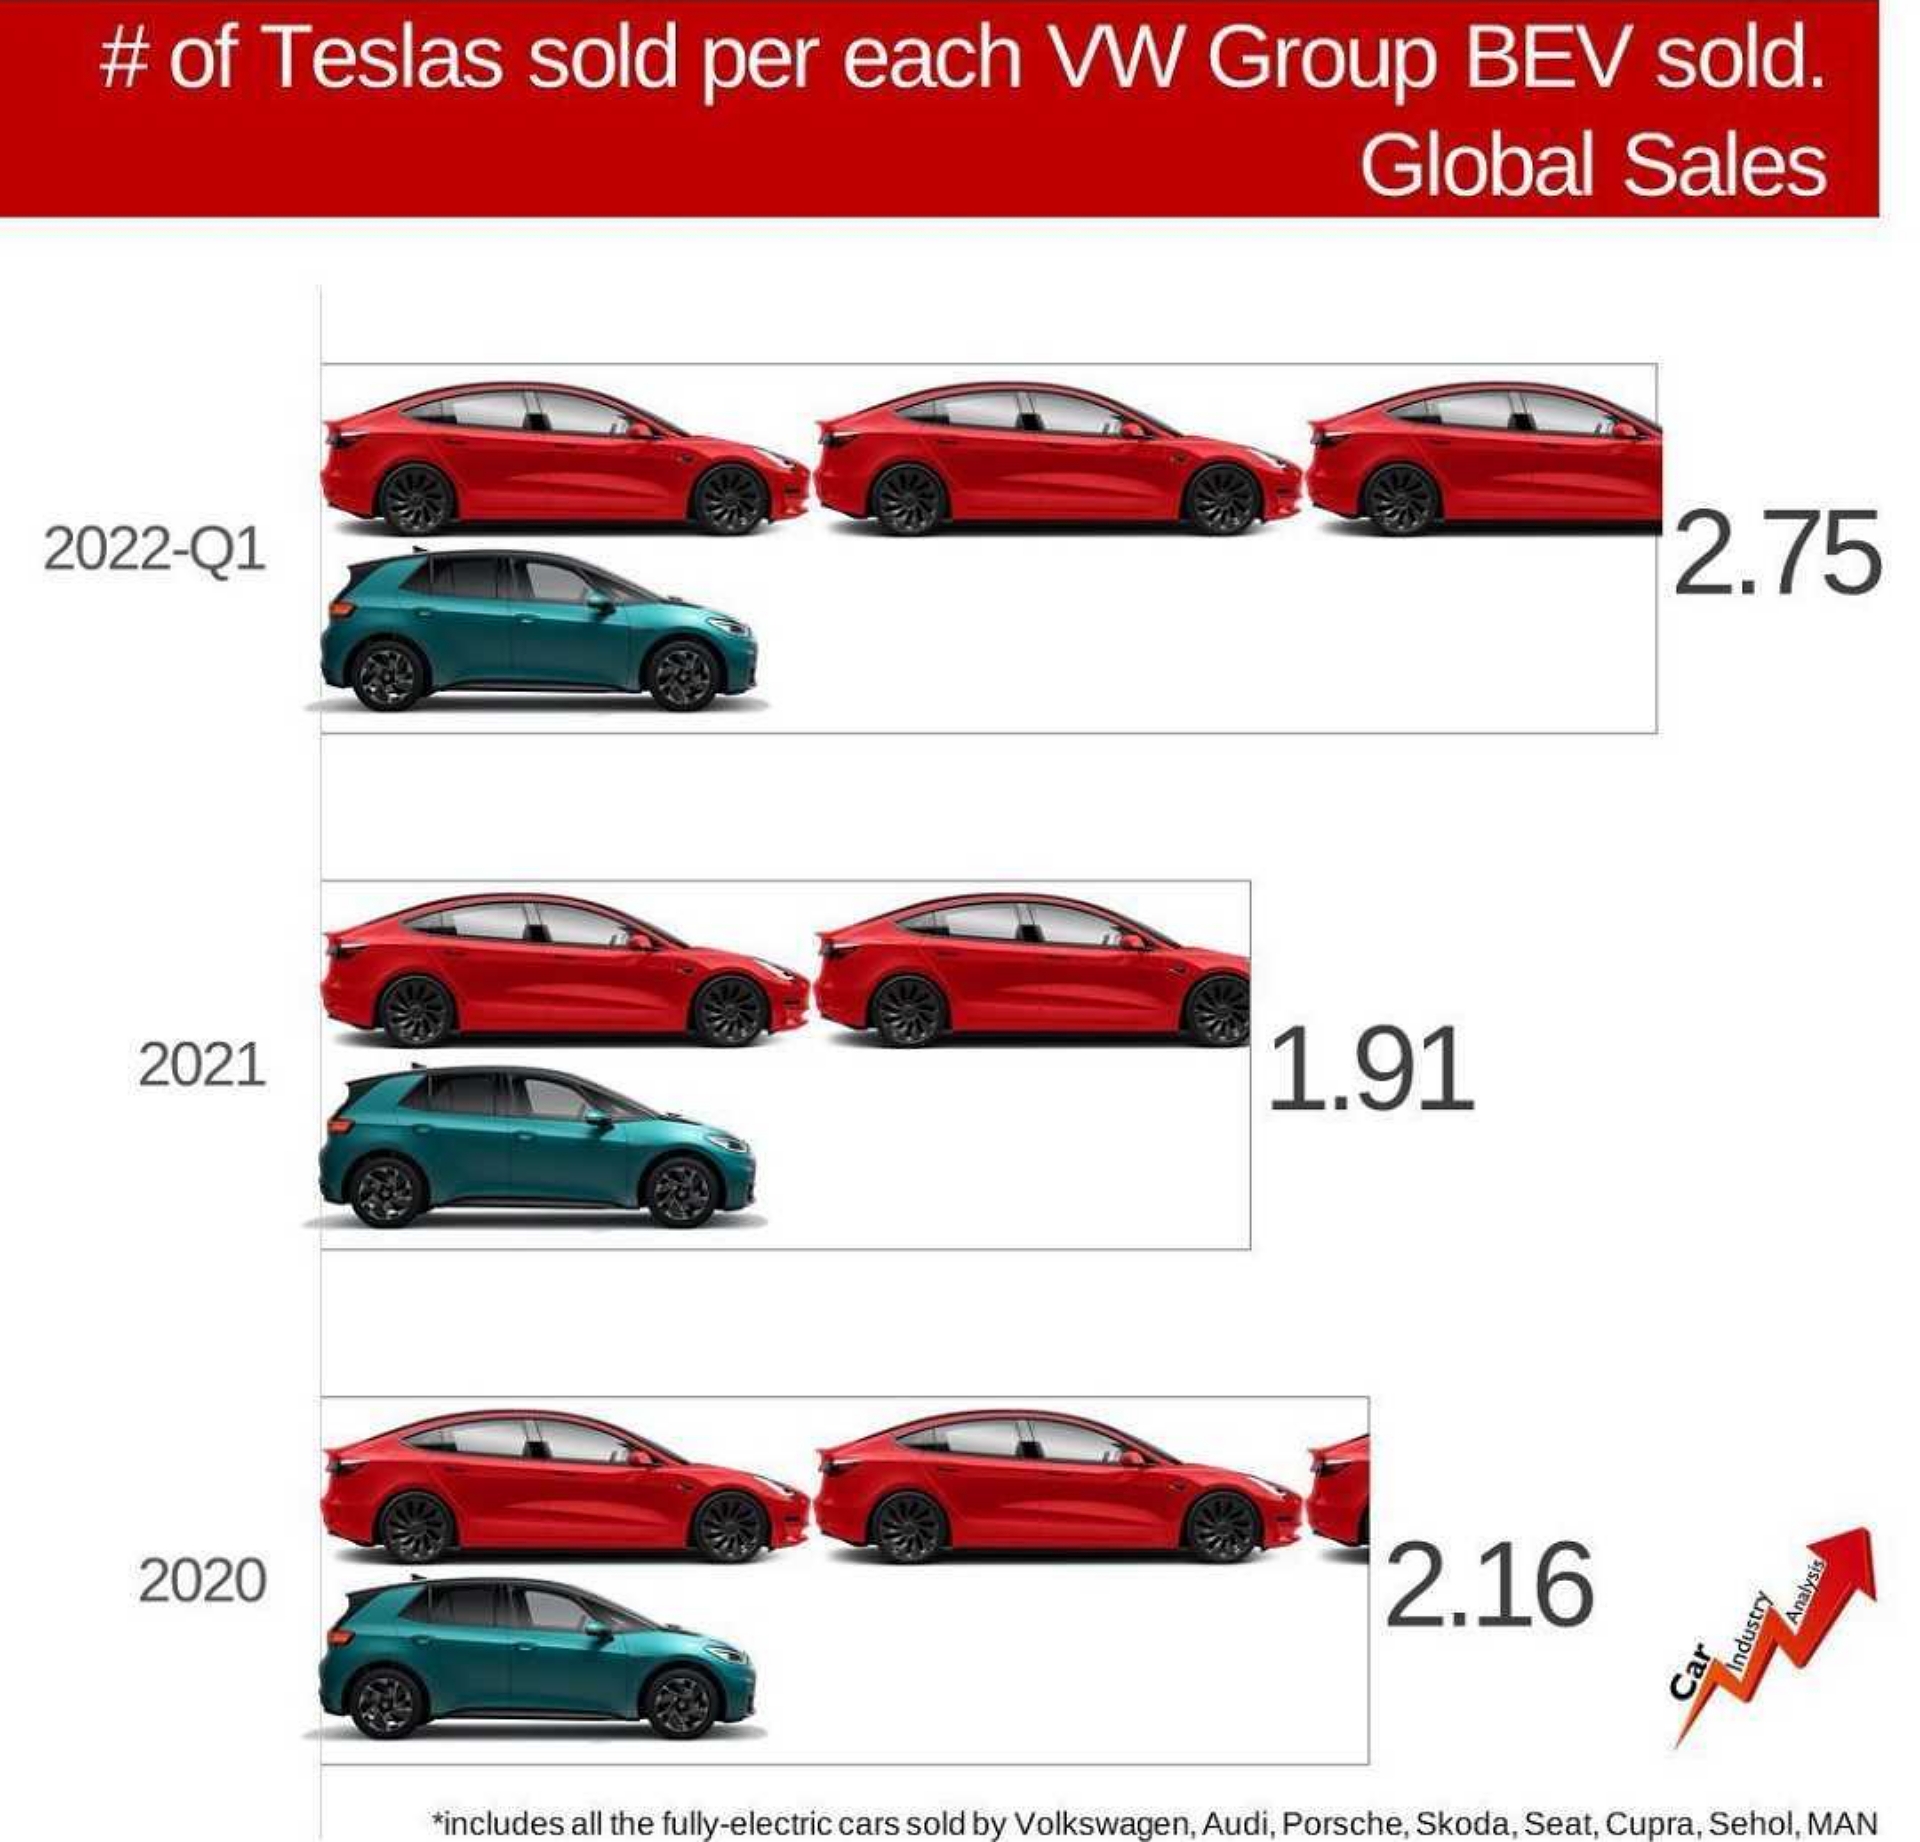 Por cada Volkswagen qeu se matricula se entregan casi tres coches eléctricos de Tesla